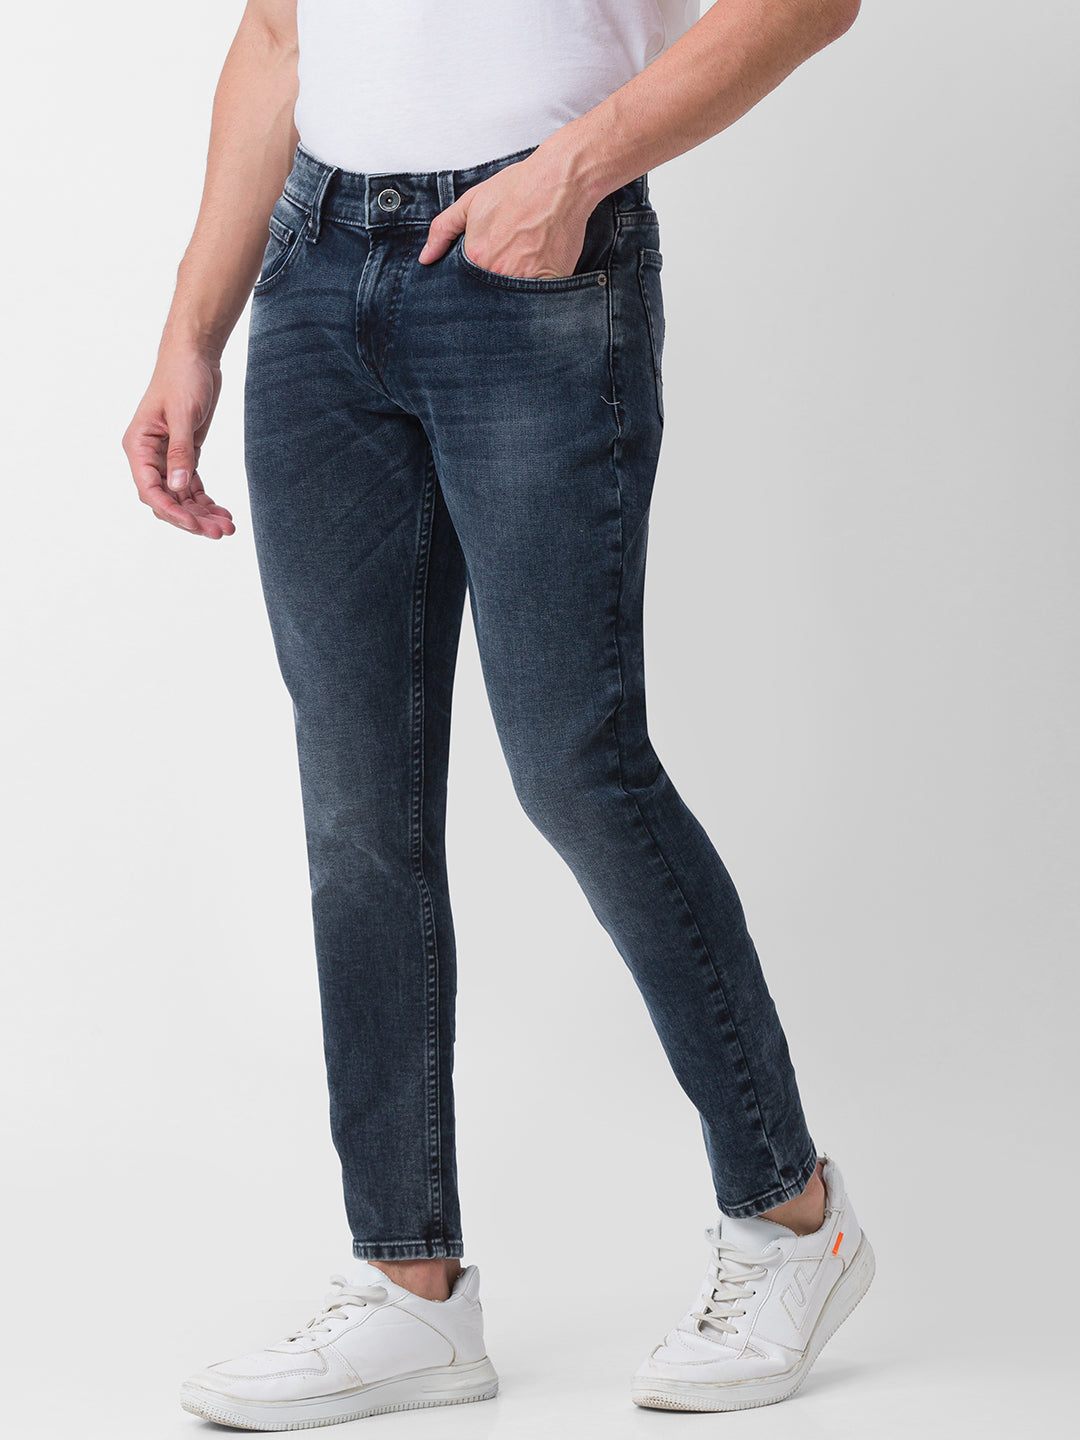 Spykar Black Indigo Cotton Slim Fit Tapered Length Jeans For Men